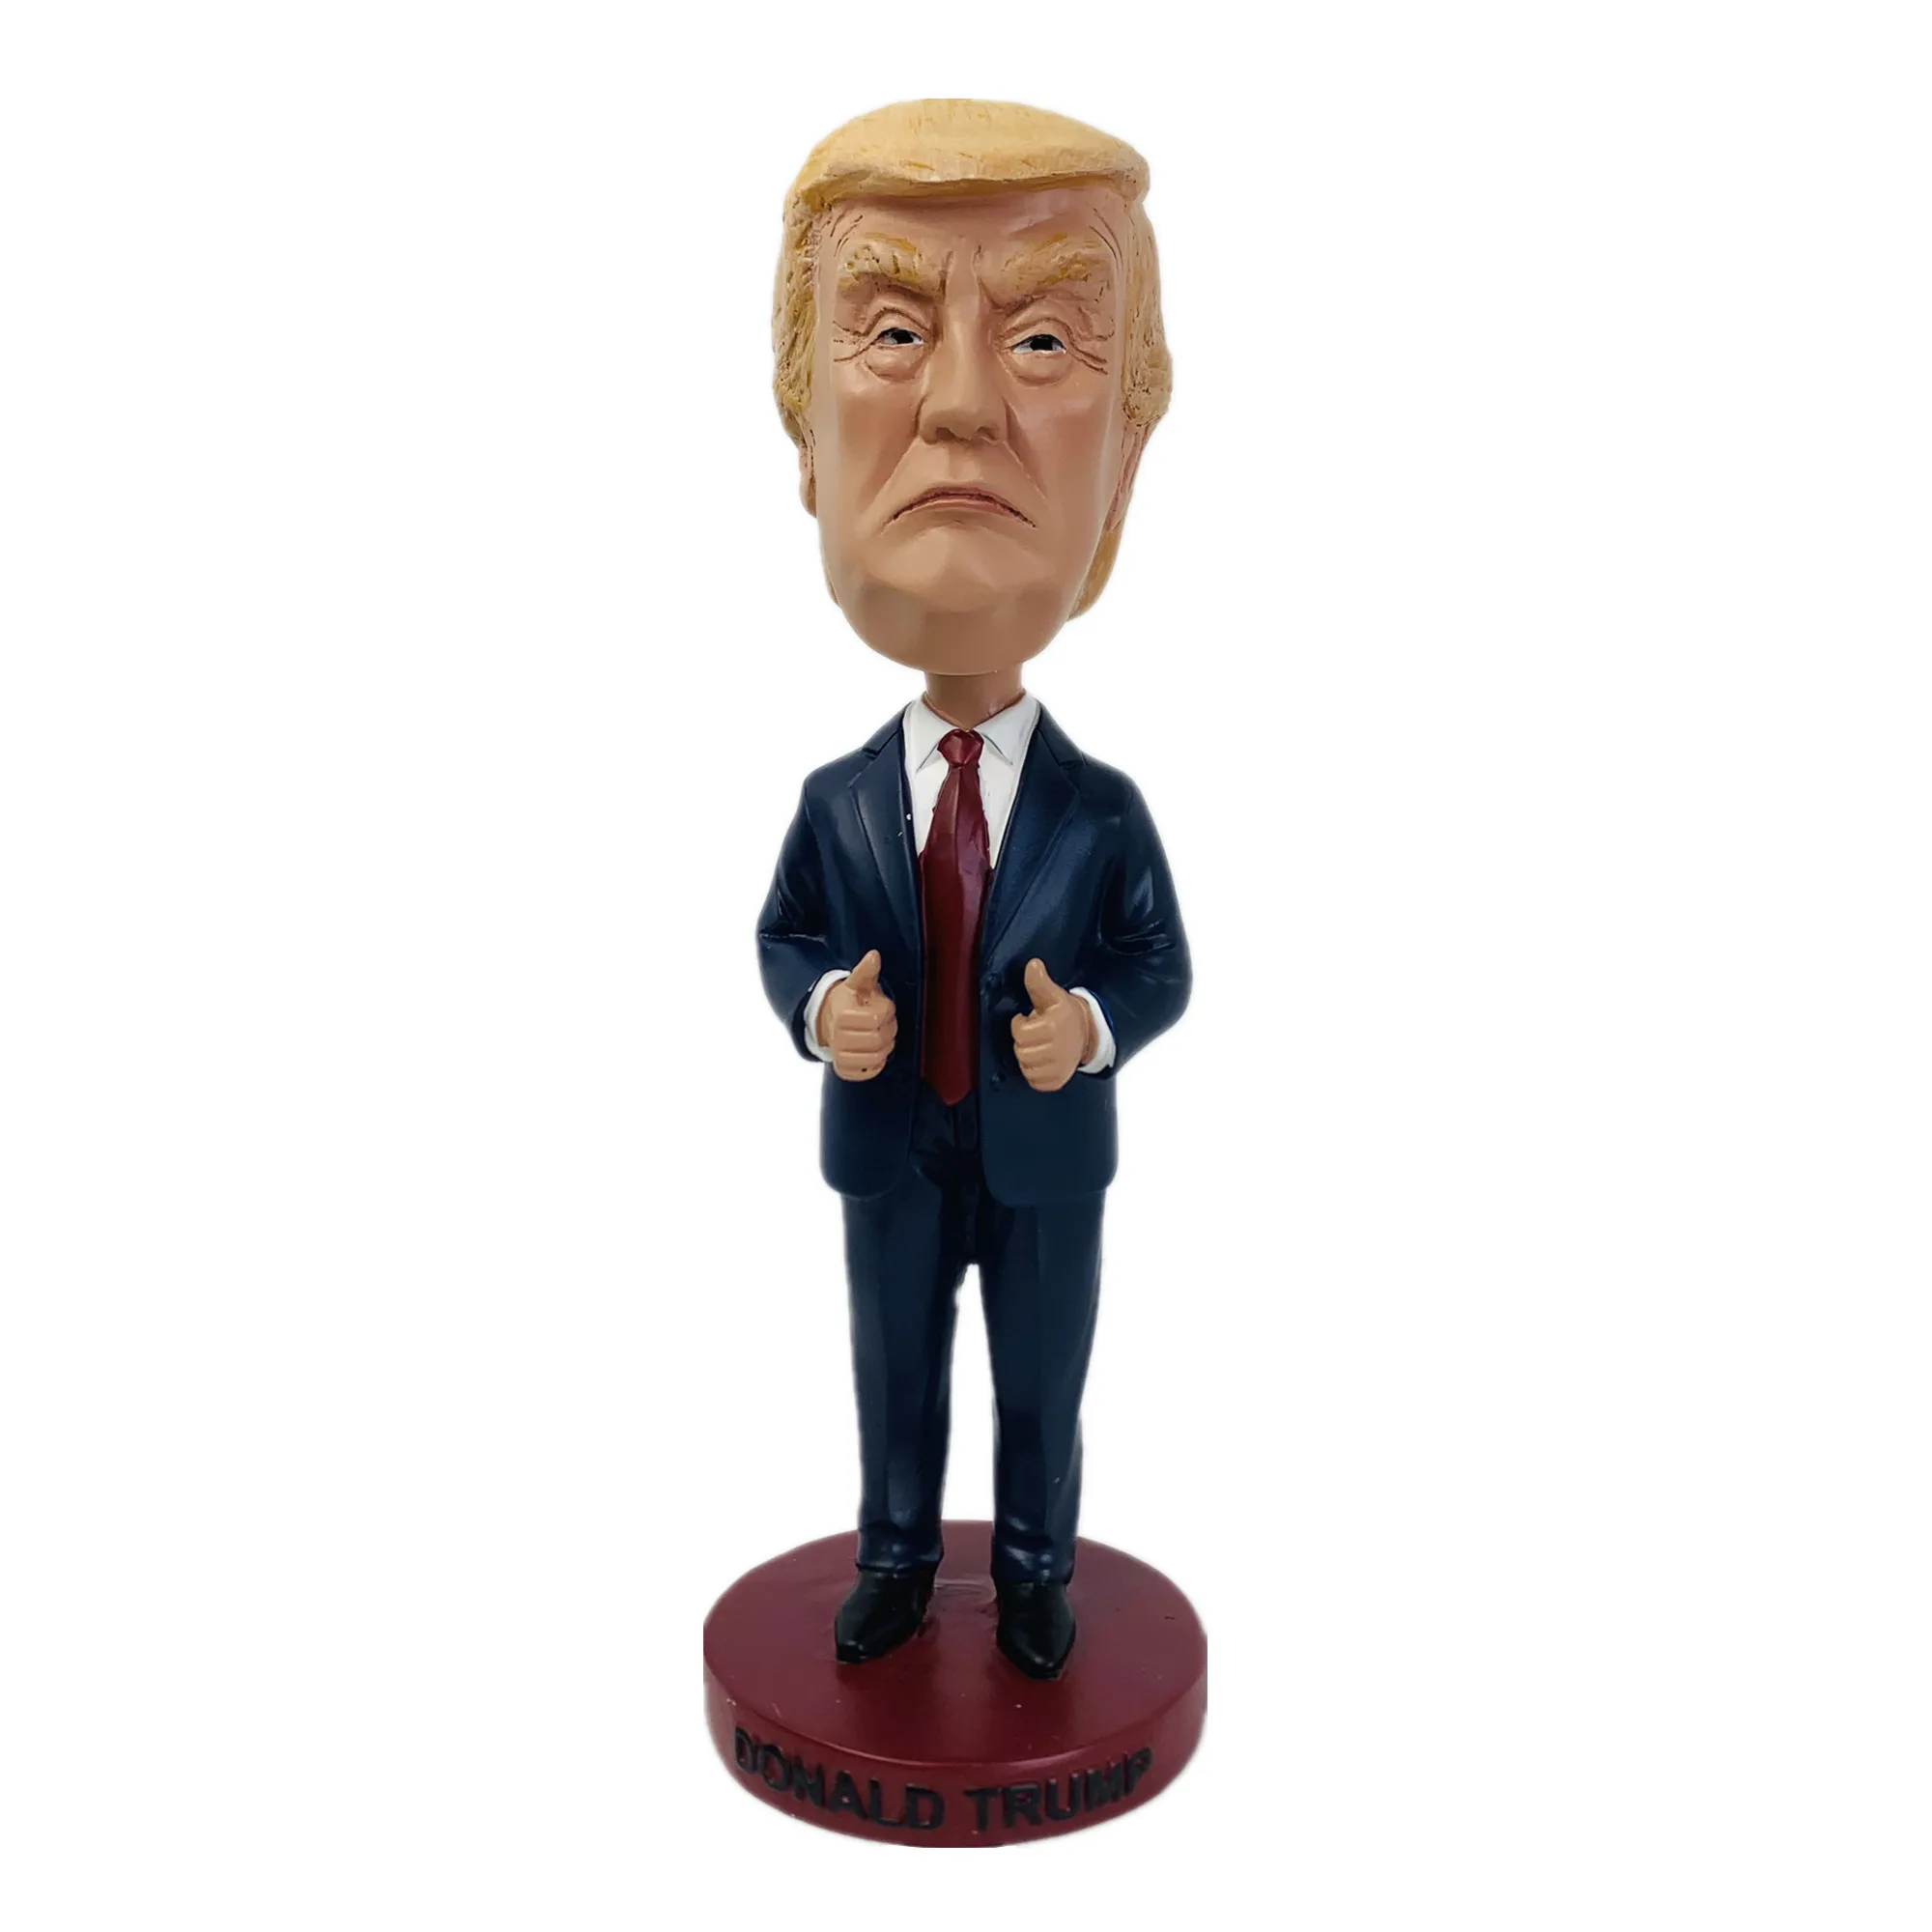 Donald Trump Limited Edition Bobblehead Toy Figurine Signature Hat & Slogan 